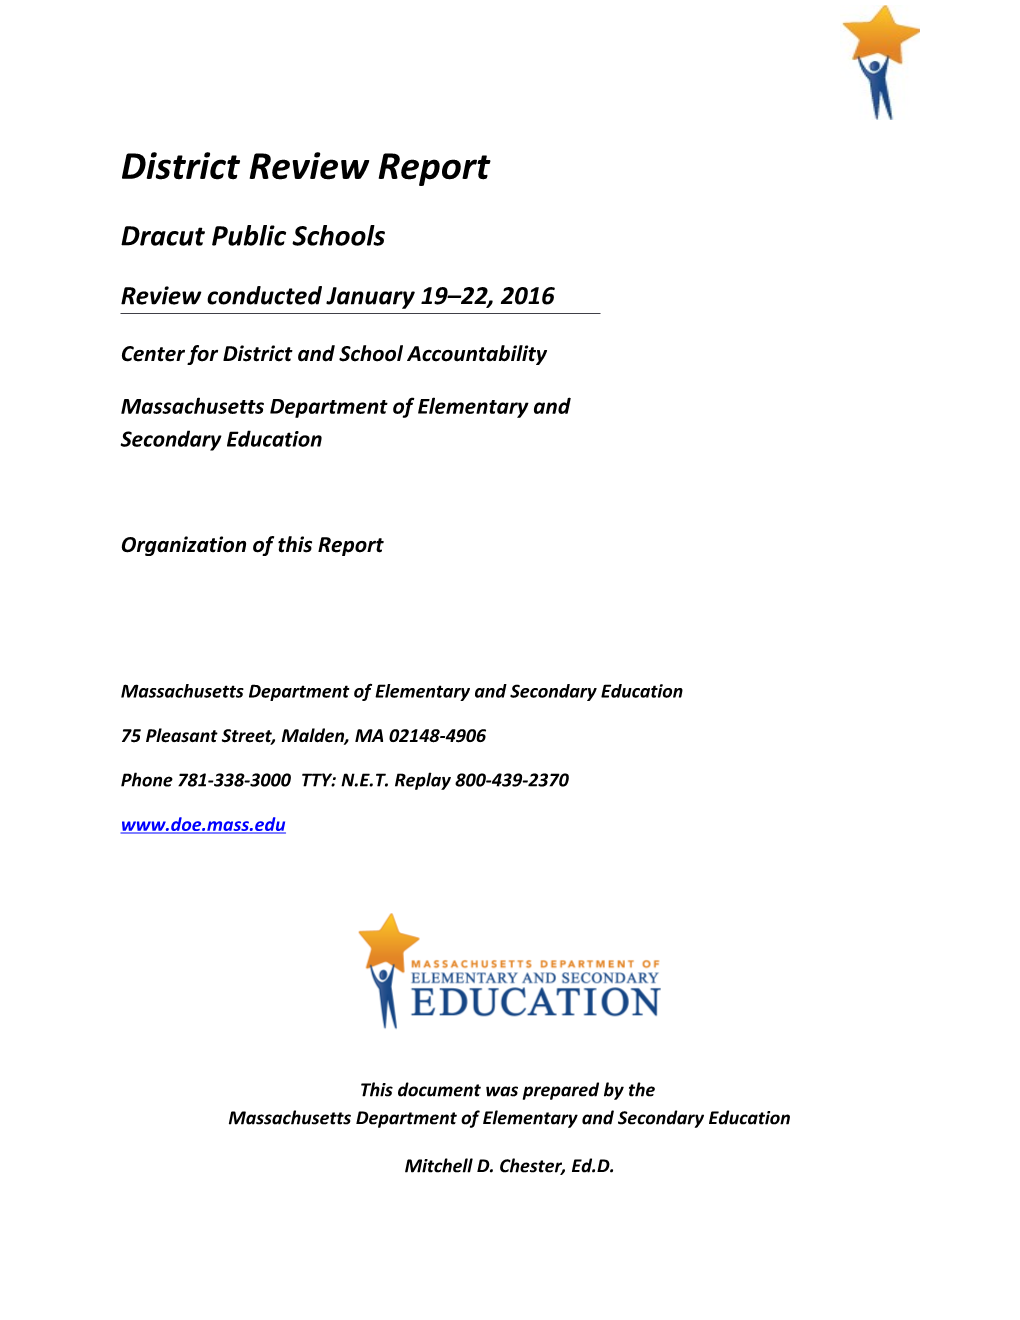 Dracut District Review Report, 2016 Onsite